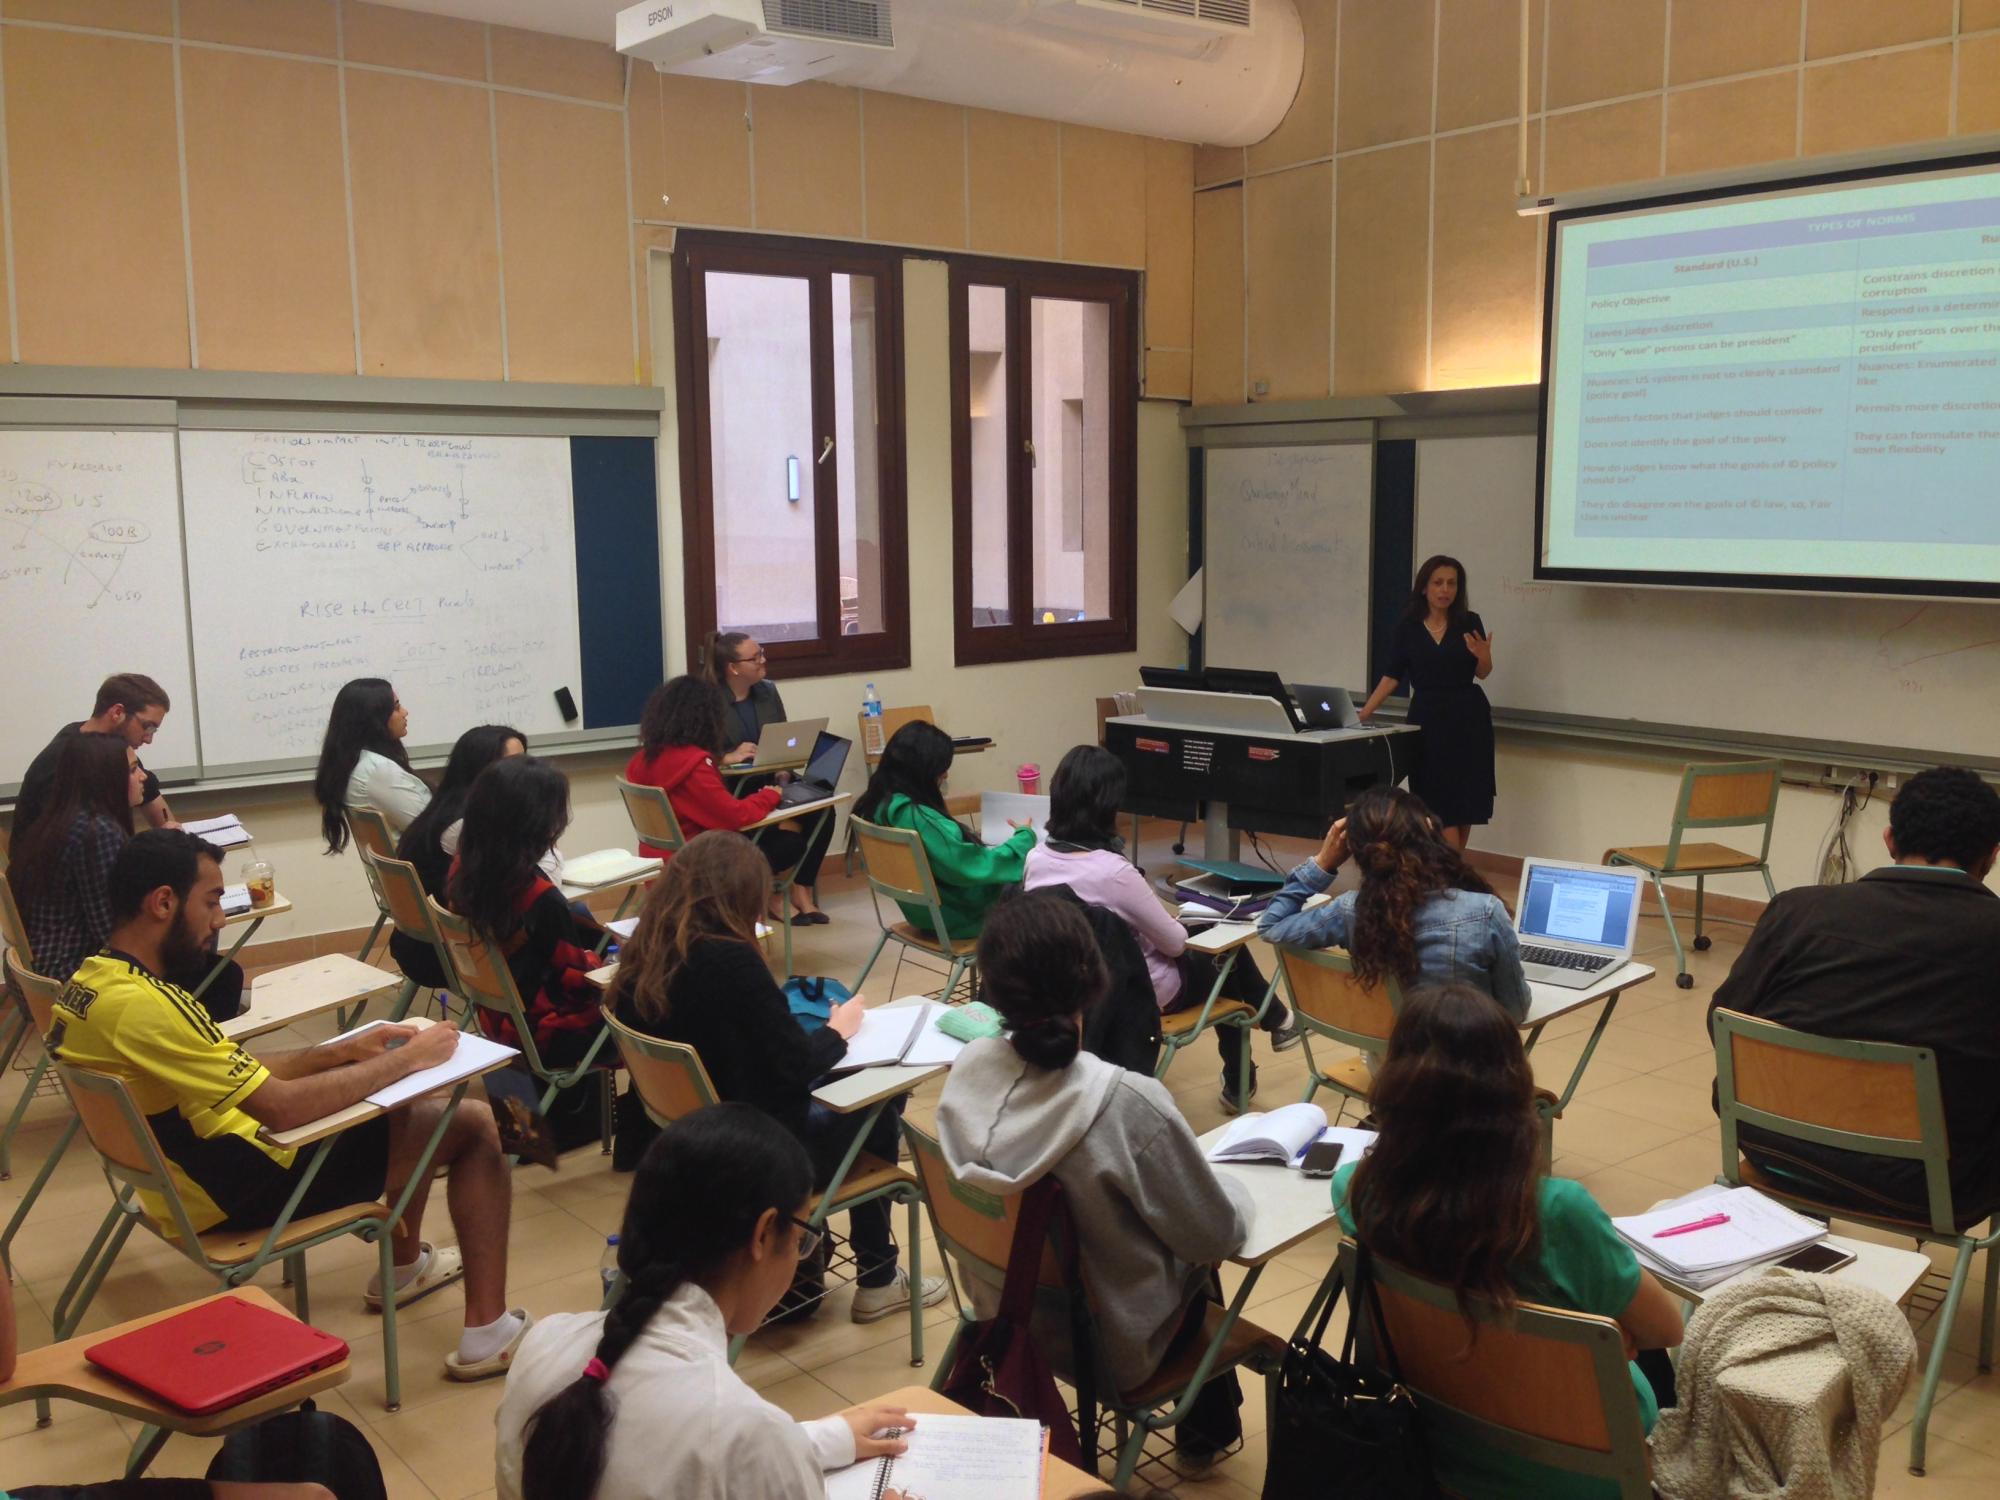 Nagla Rizk teaches CopyrightX to economics students.